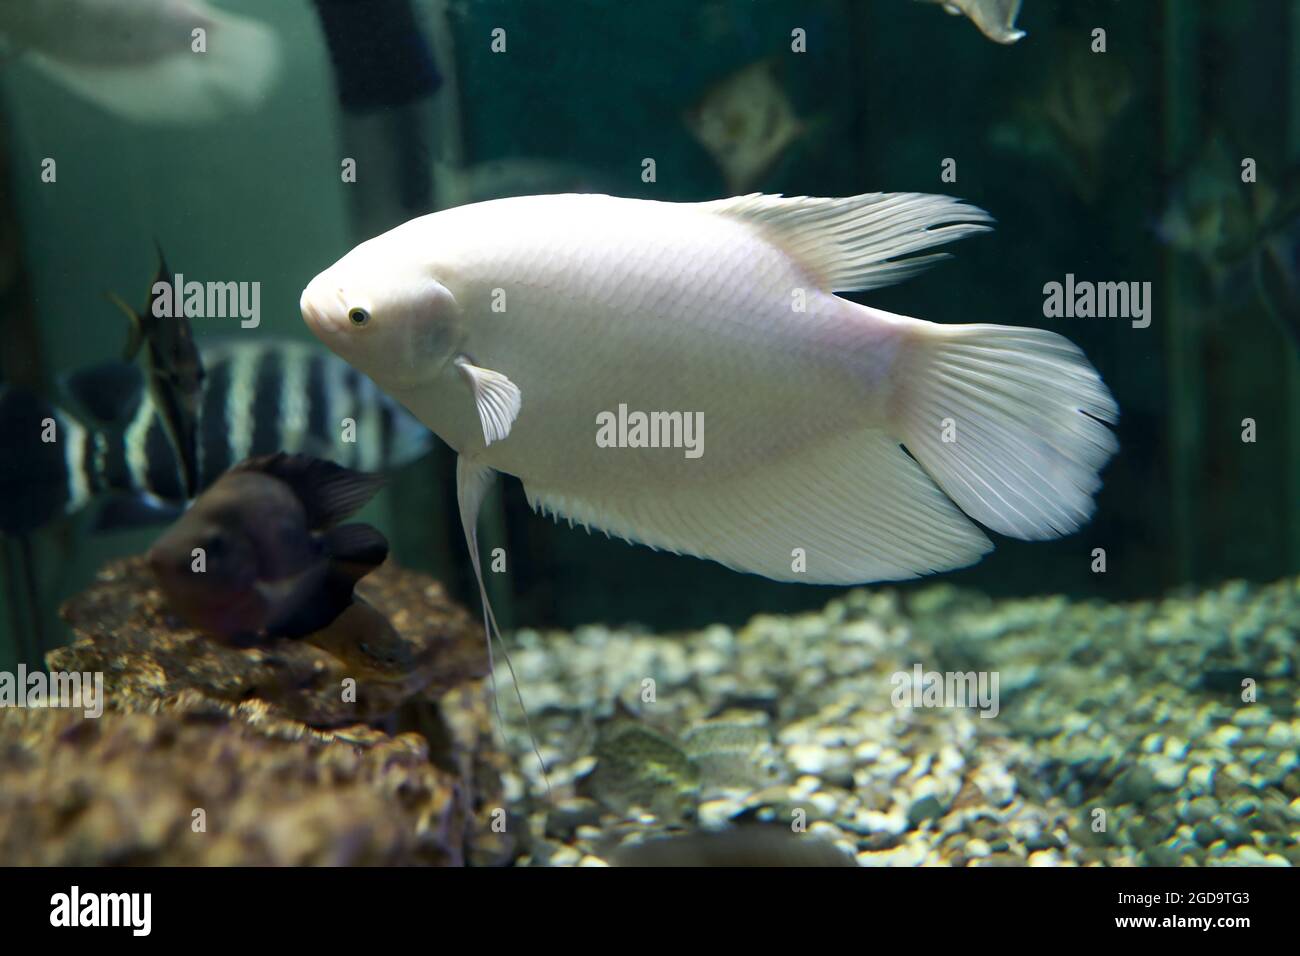 View of Trichopodus trichopterus fish in aquarium Stock Photo